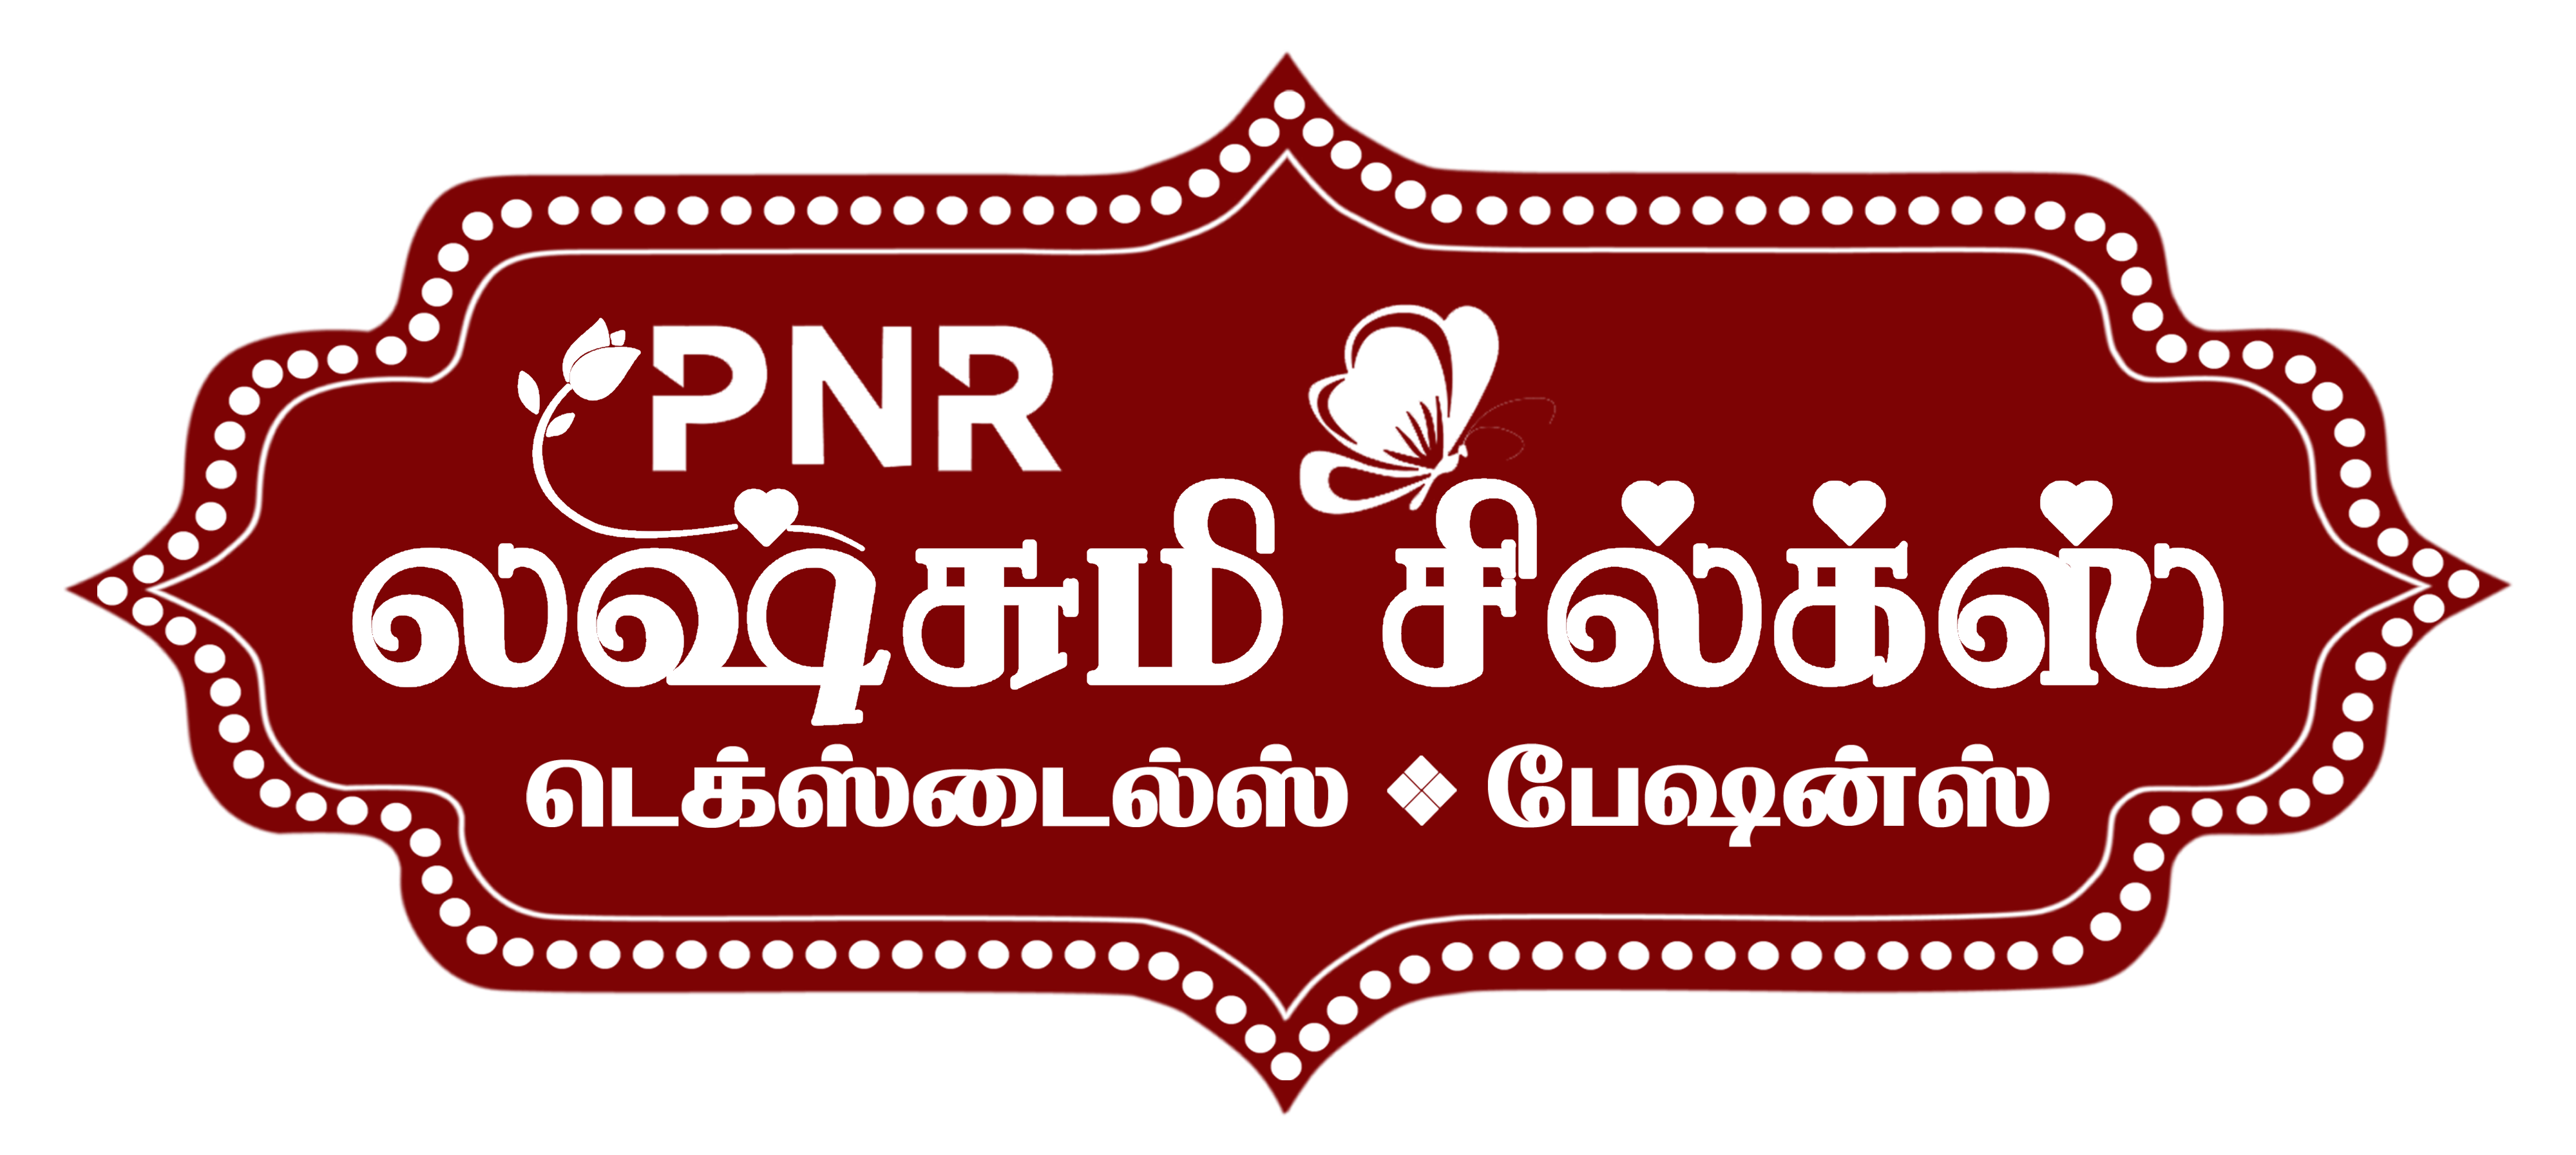 pnr logo